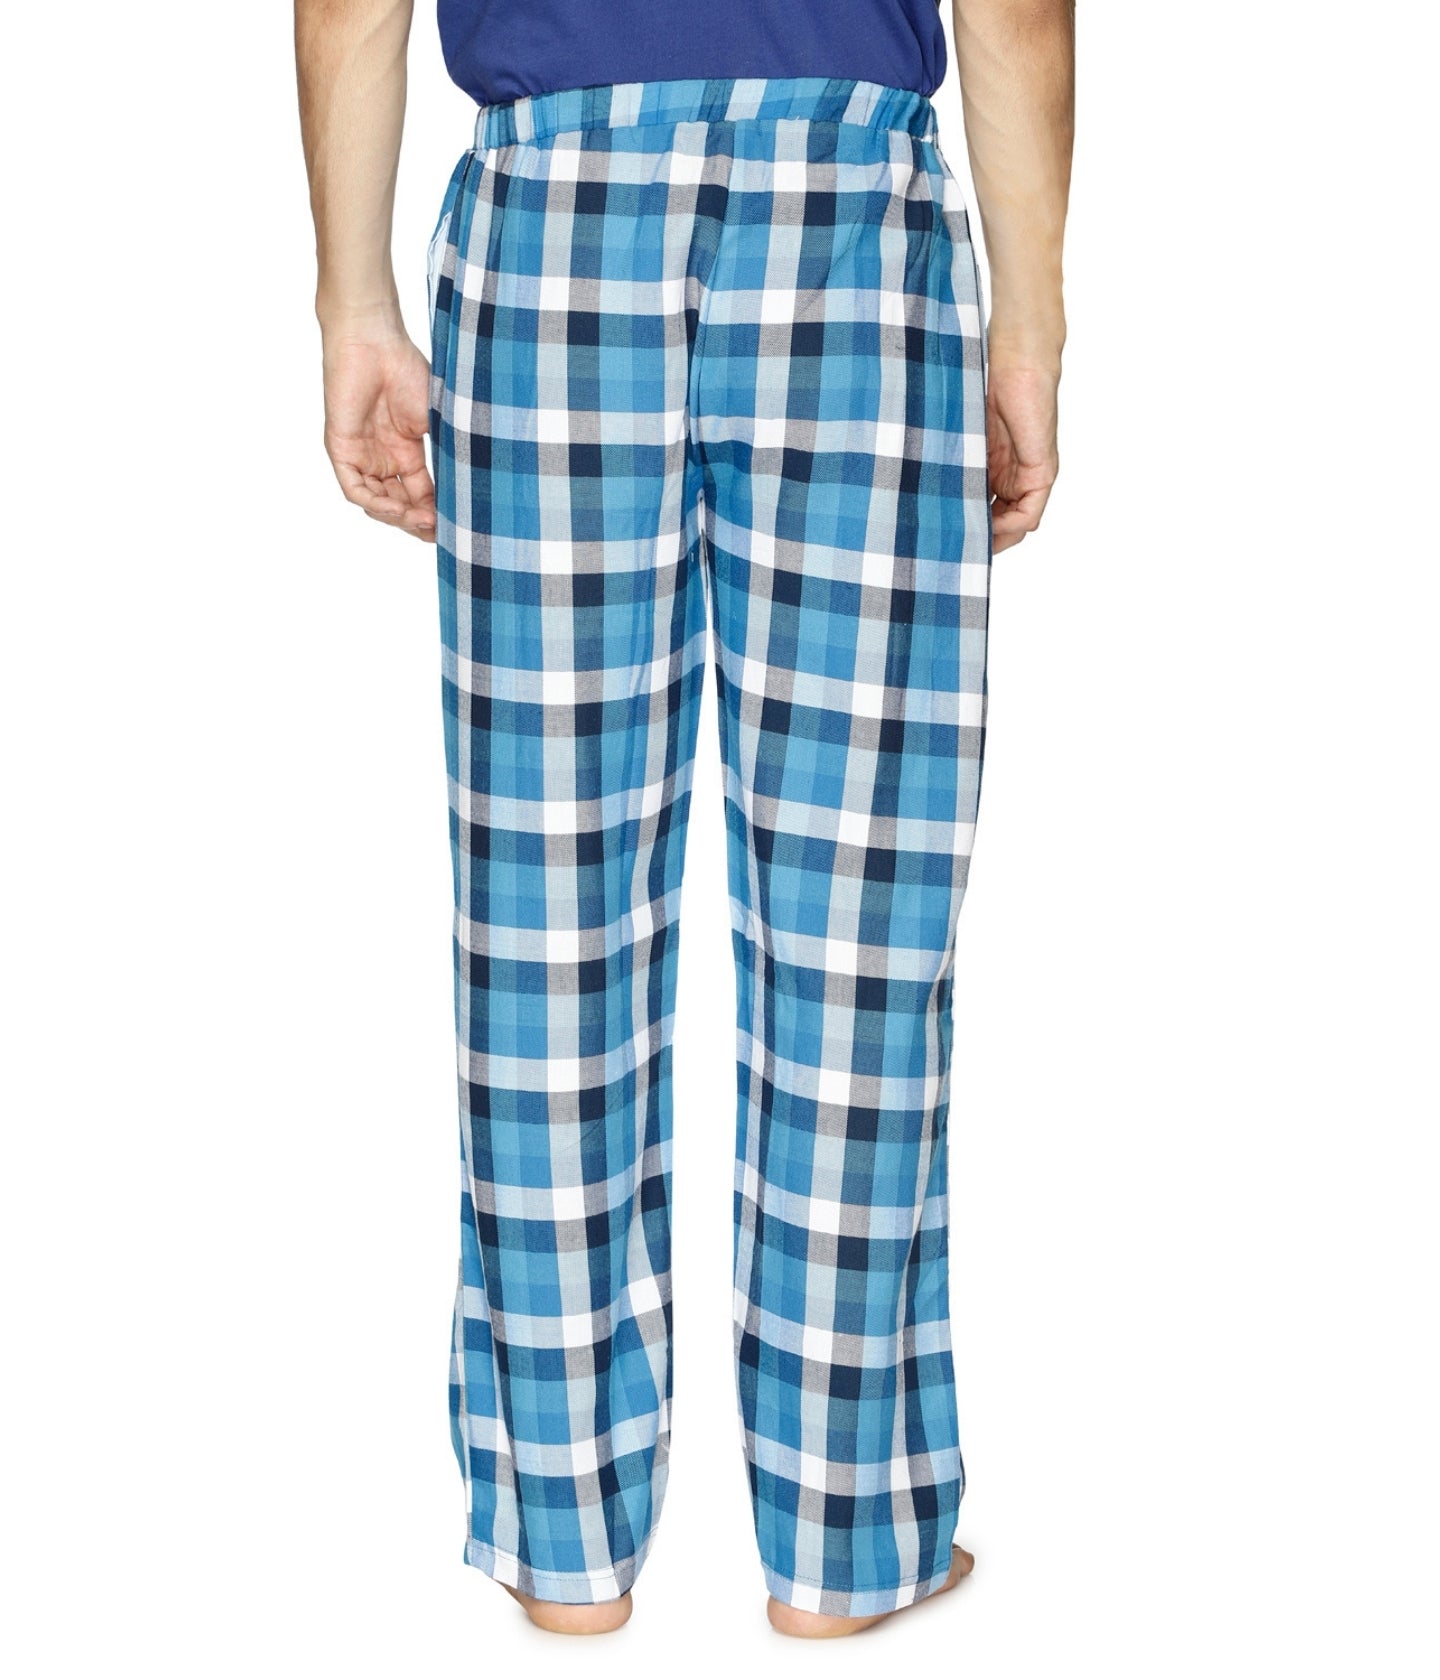 Black White Blue Checked Premium Cotton Lounge Pant Pajama Online In India  Color Black SizeShirt S